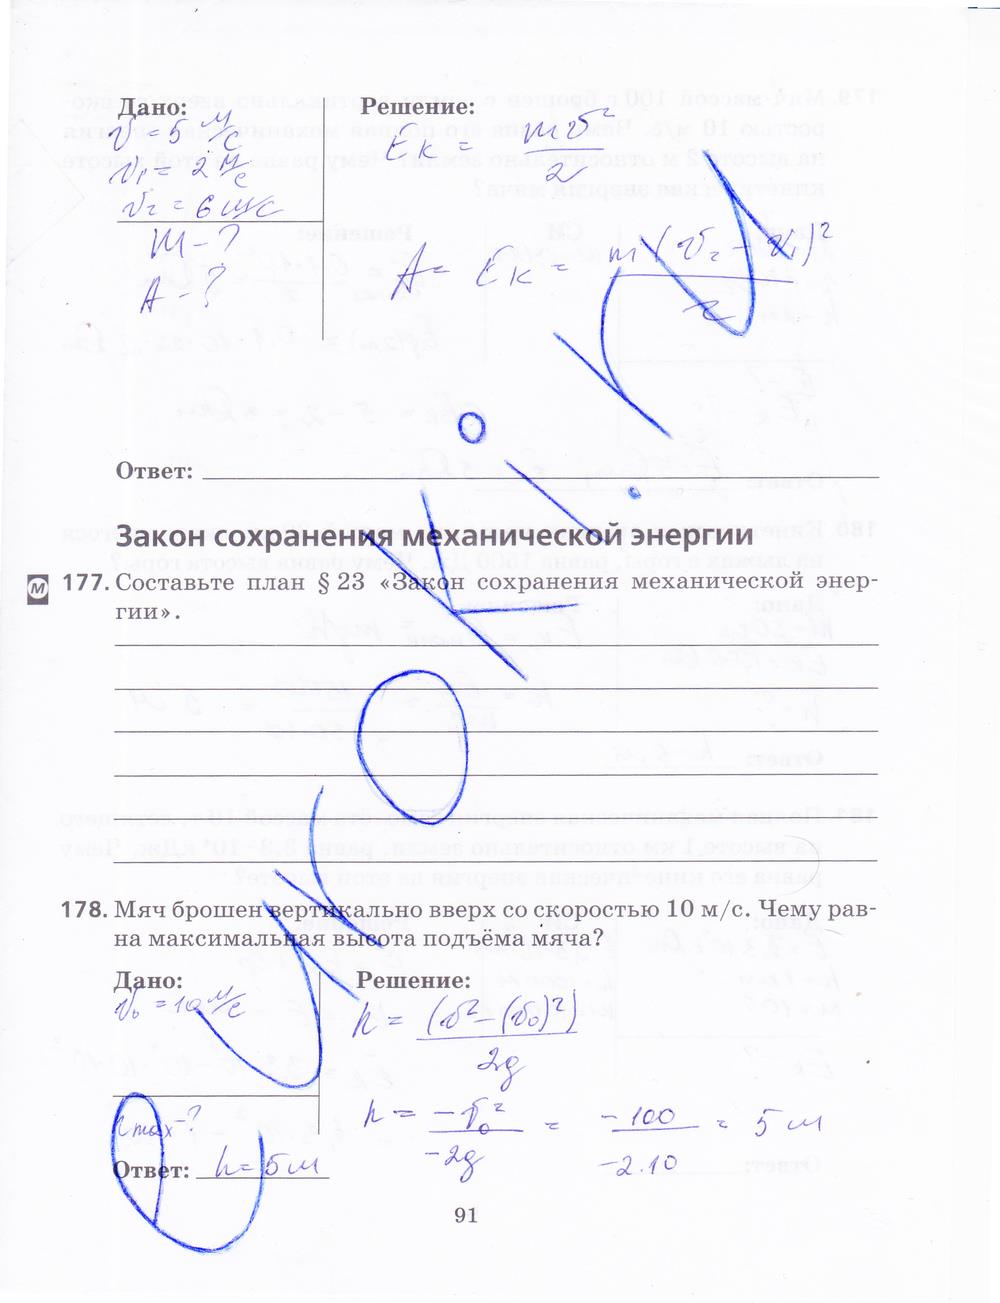 гдз 9 класс рабочая тетрадь страница 91 физика Пурышева, Важеевская, Чаругин